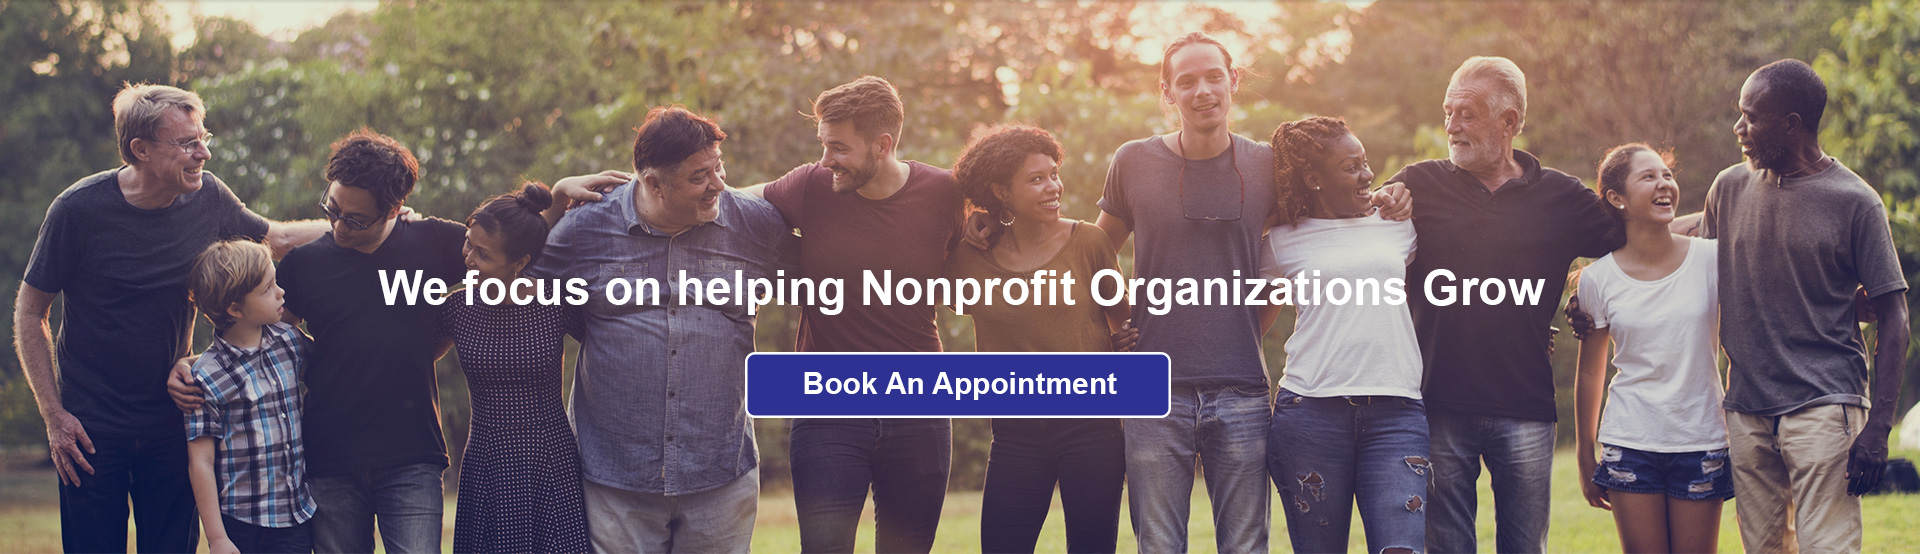 We focus on helping Nonprofit Organizations Grow